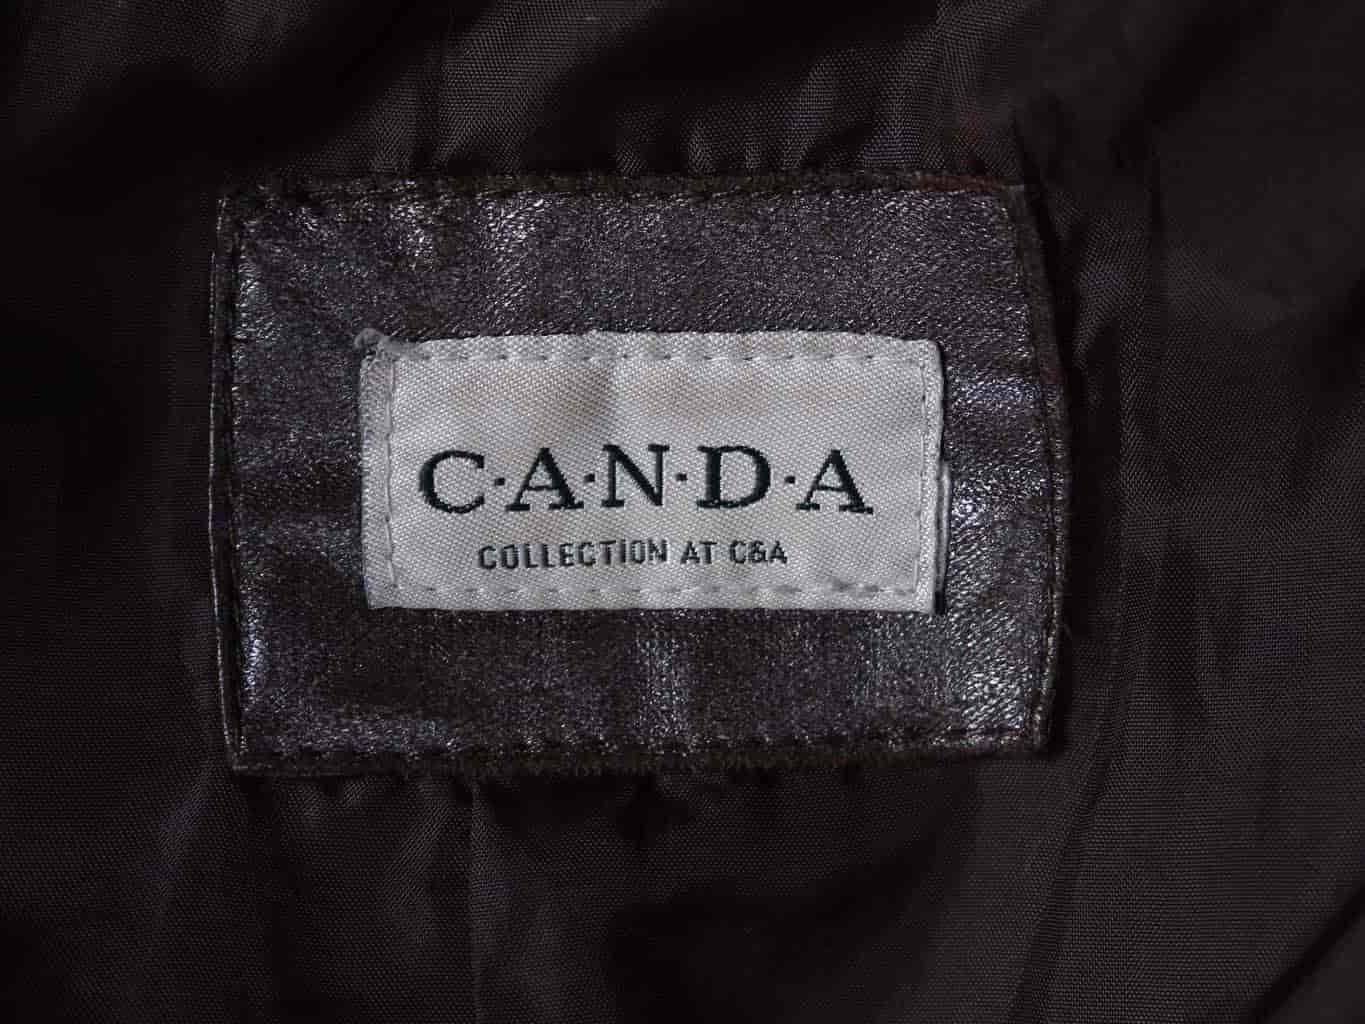 Collection страна производитель. Canda collection at c a куртка. Canda бренд. Одежда Candas. Collection фирма одежды.